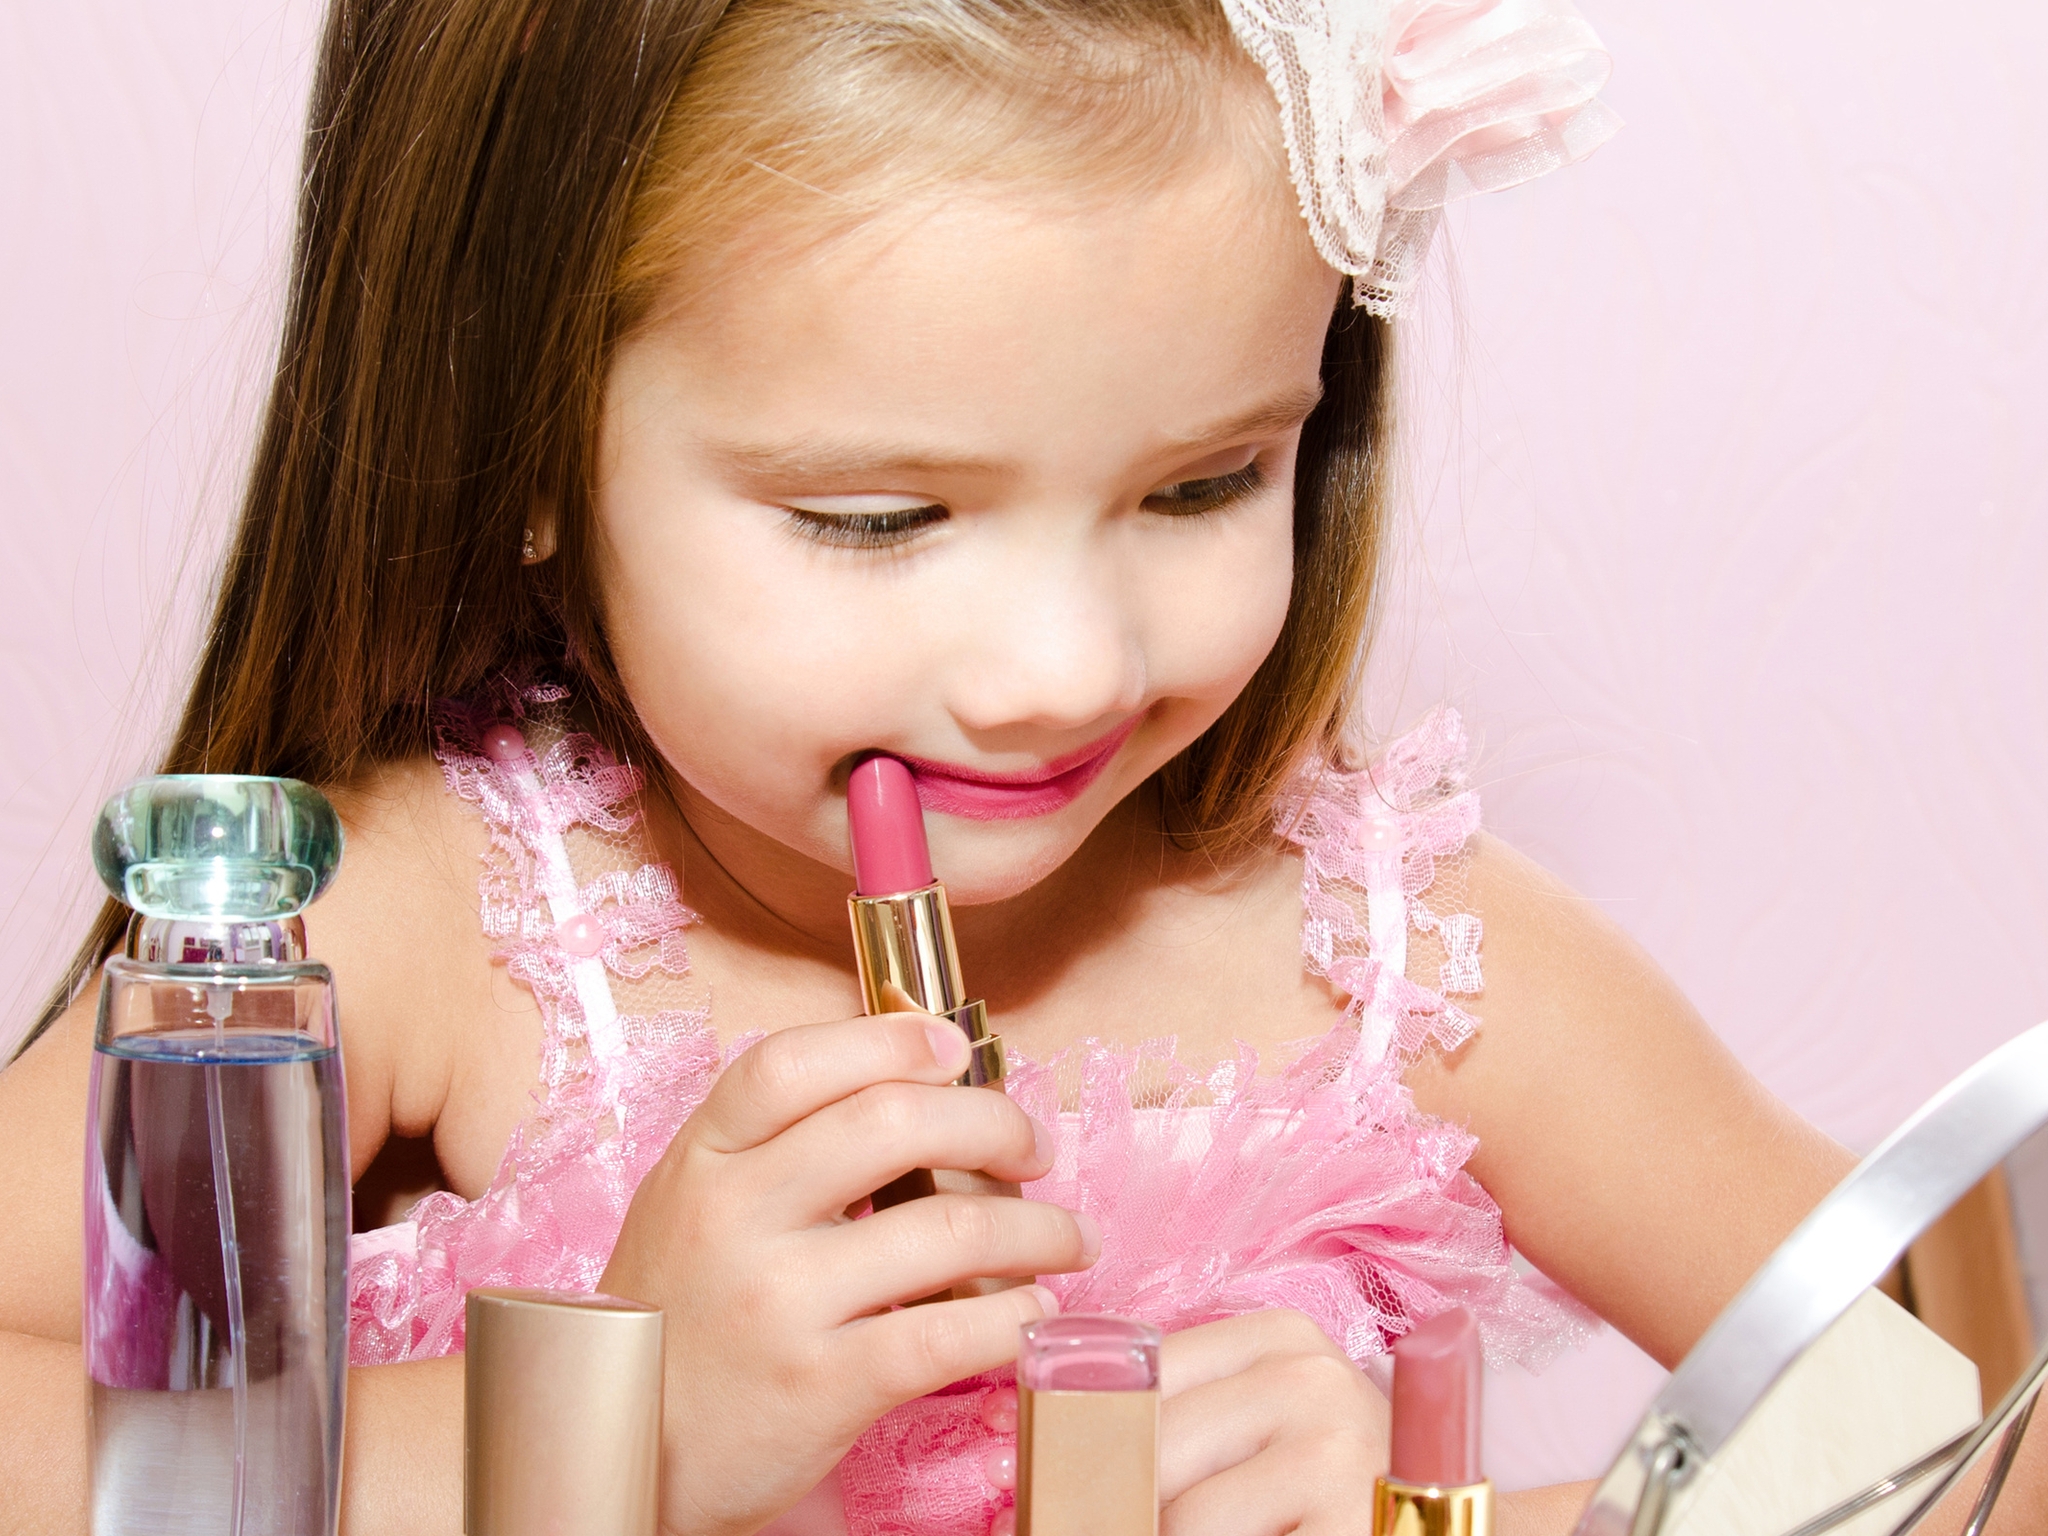 Image: Girl, child, hair, mirror, lipstick, cosmetics, makeup, perfume